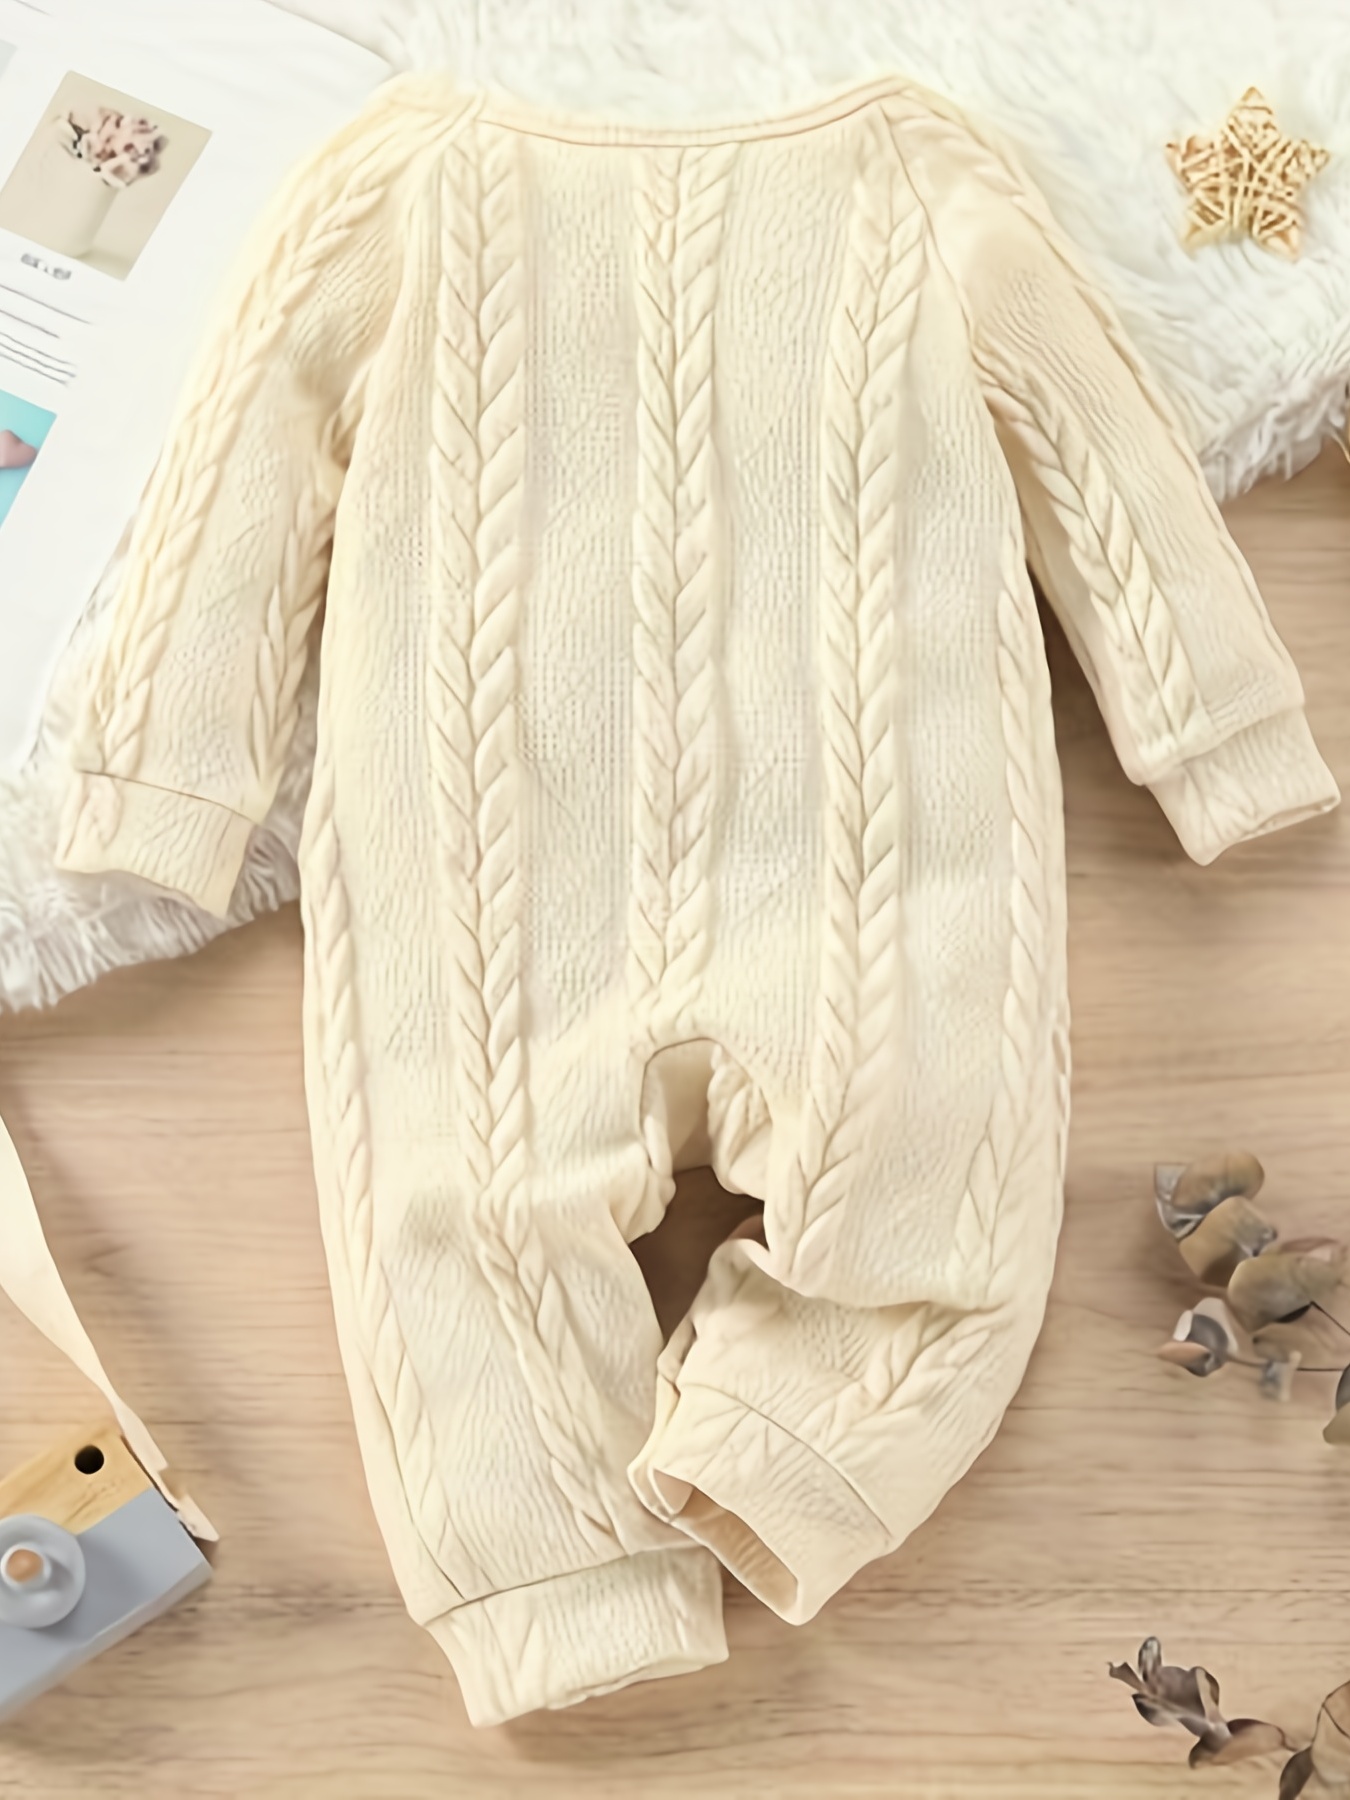 2pcs Baby Boy Cotton Rib Knit Solid Long-sleeve Jumpsuits Set